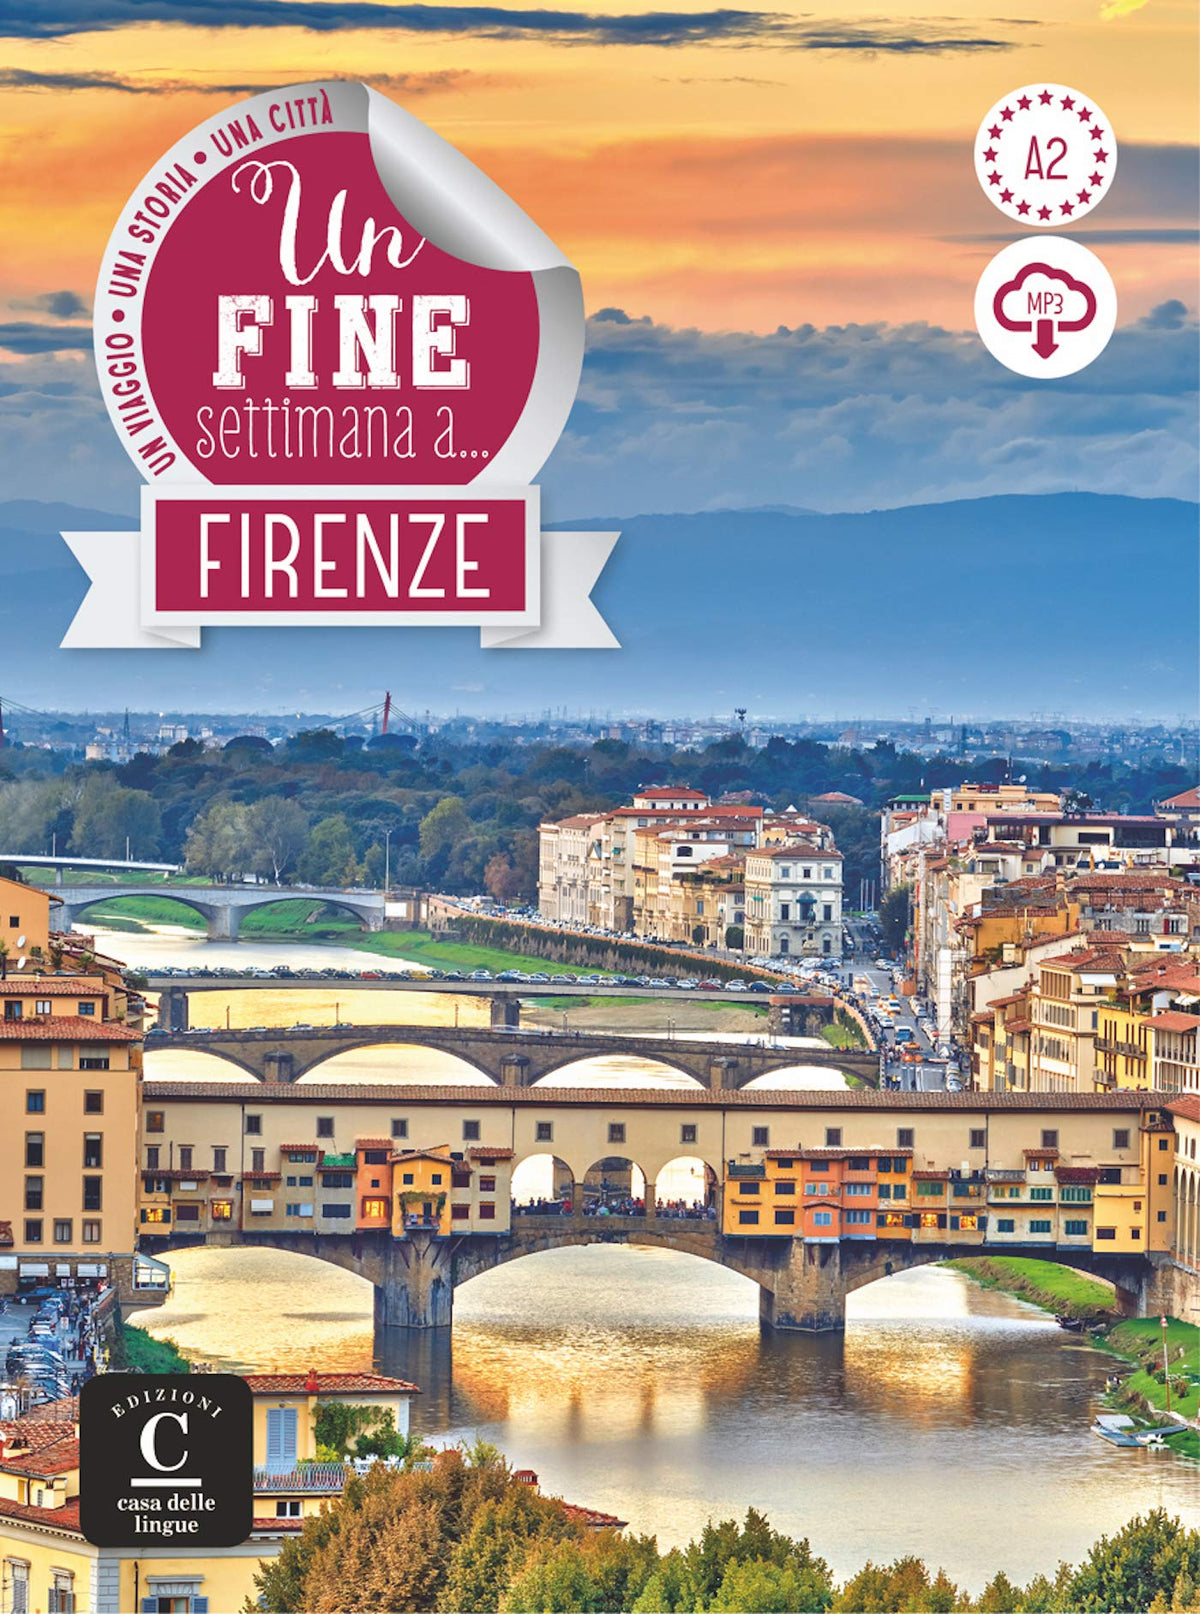 Un fine settimana a Firenze + online MP3 audio